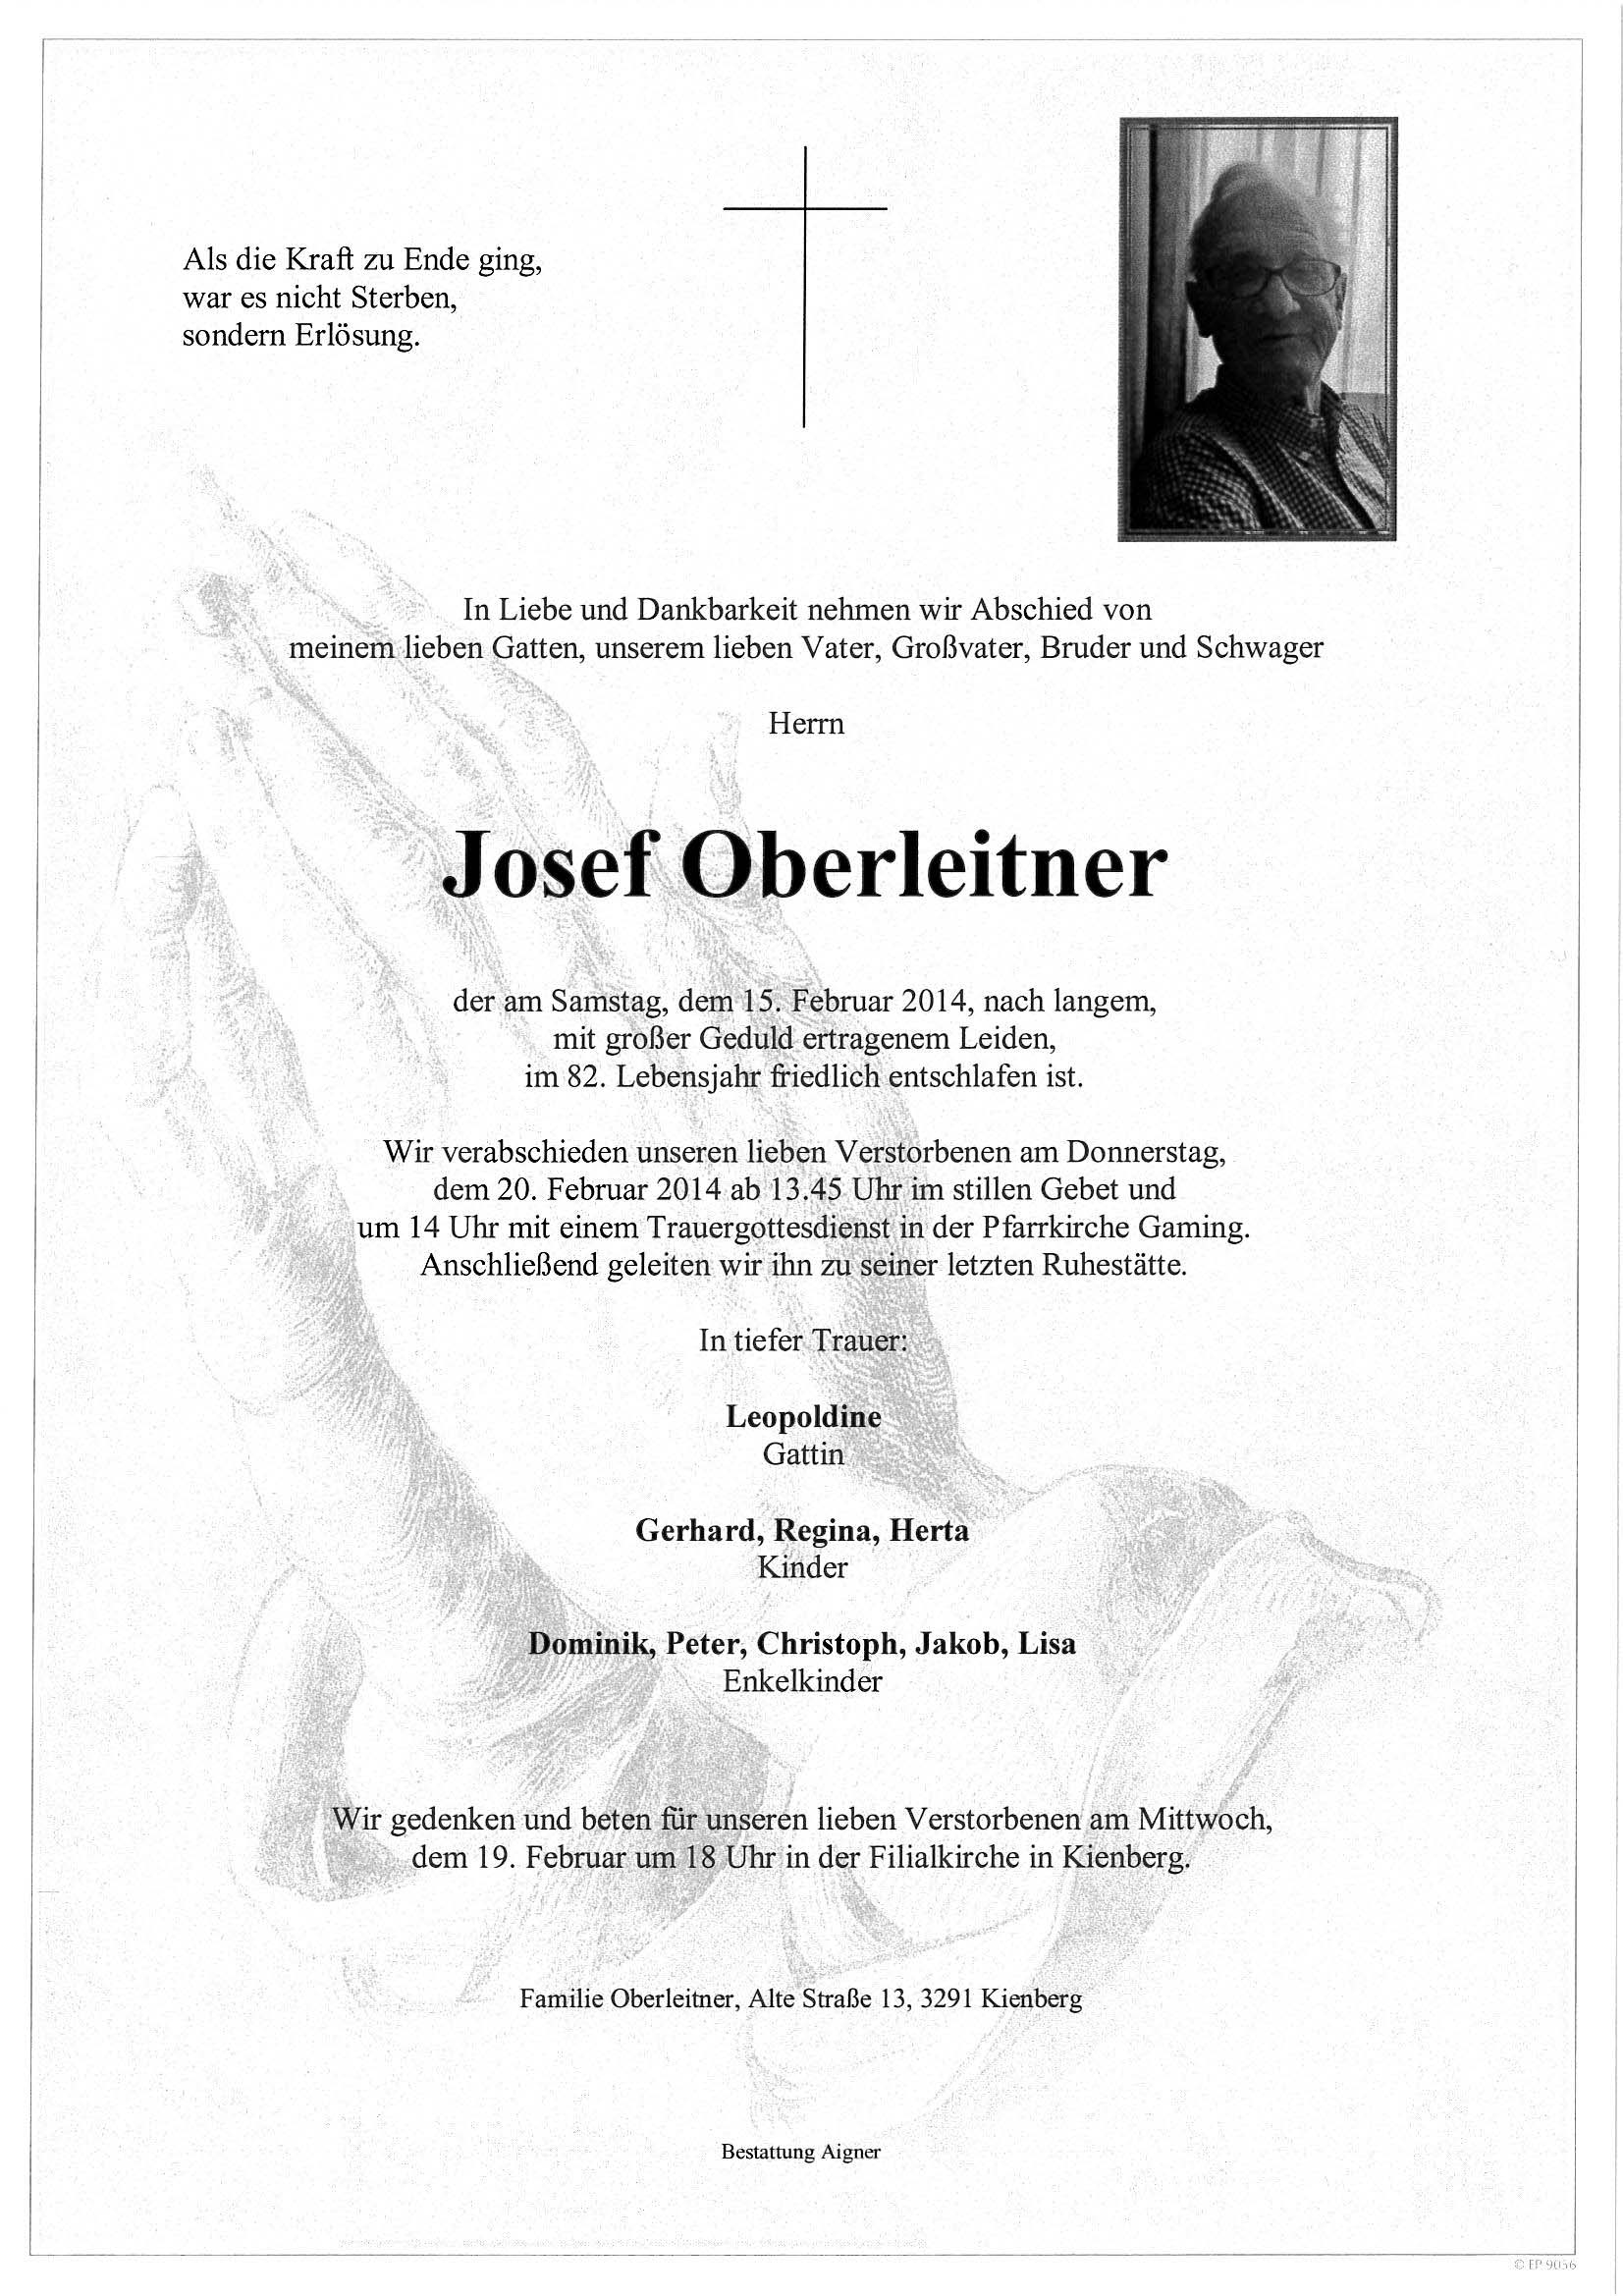 Josef Oberleitner